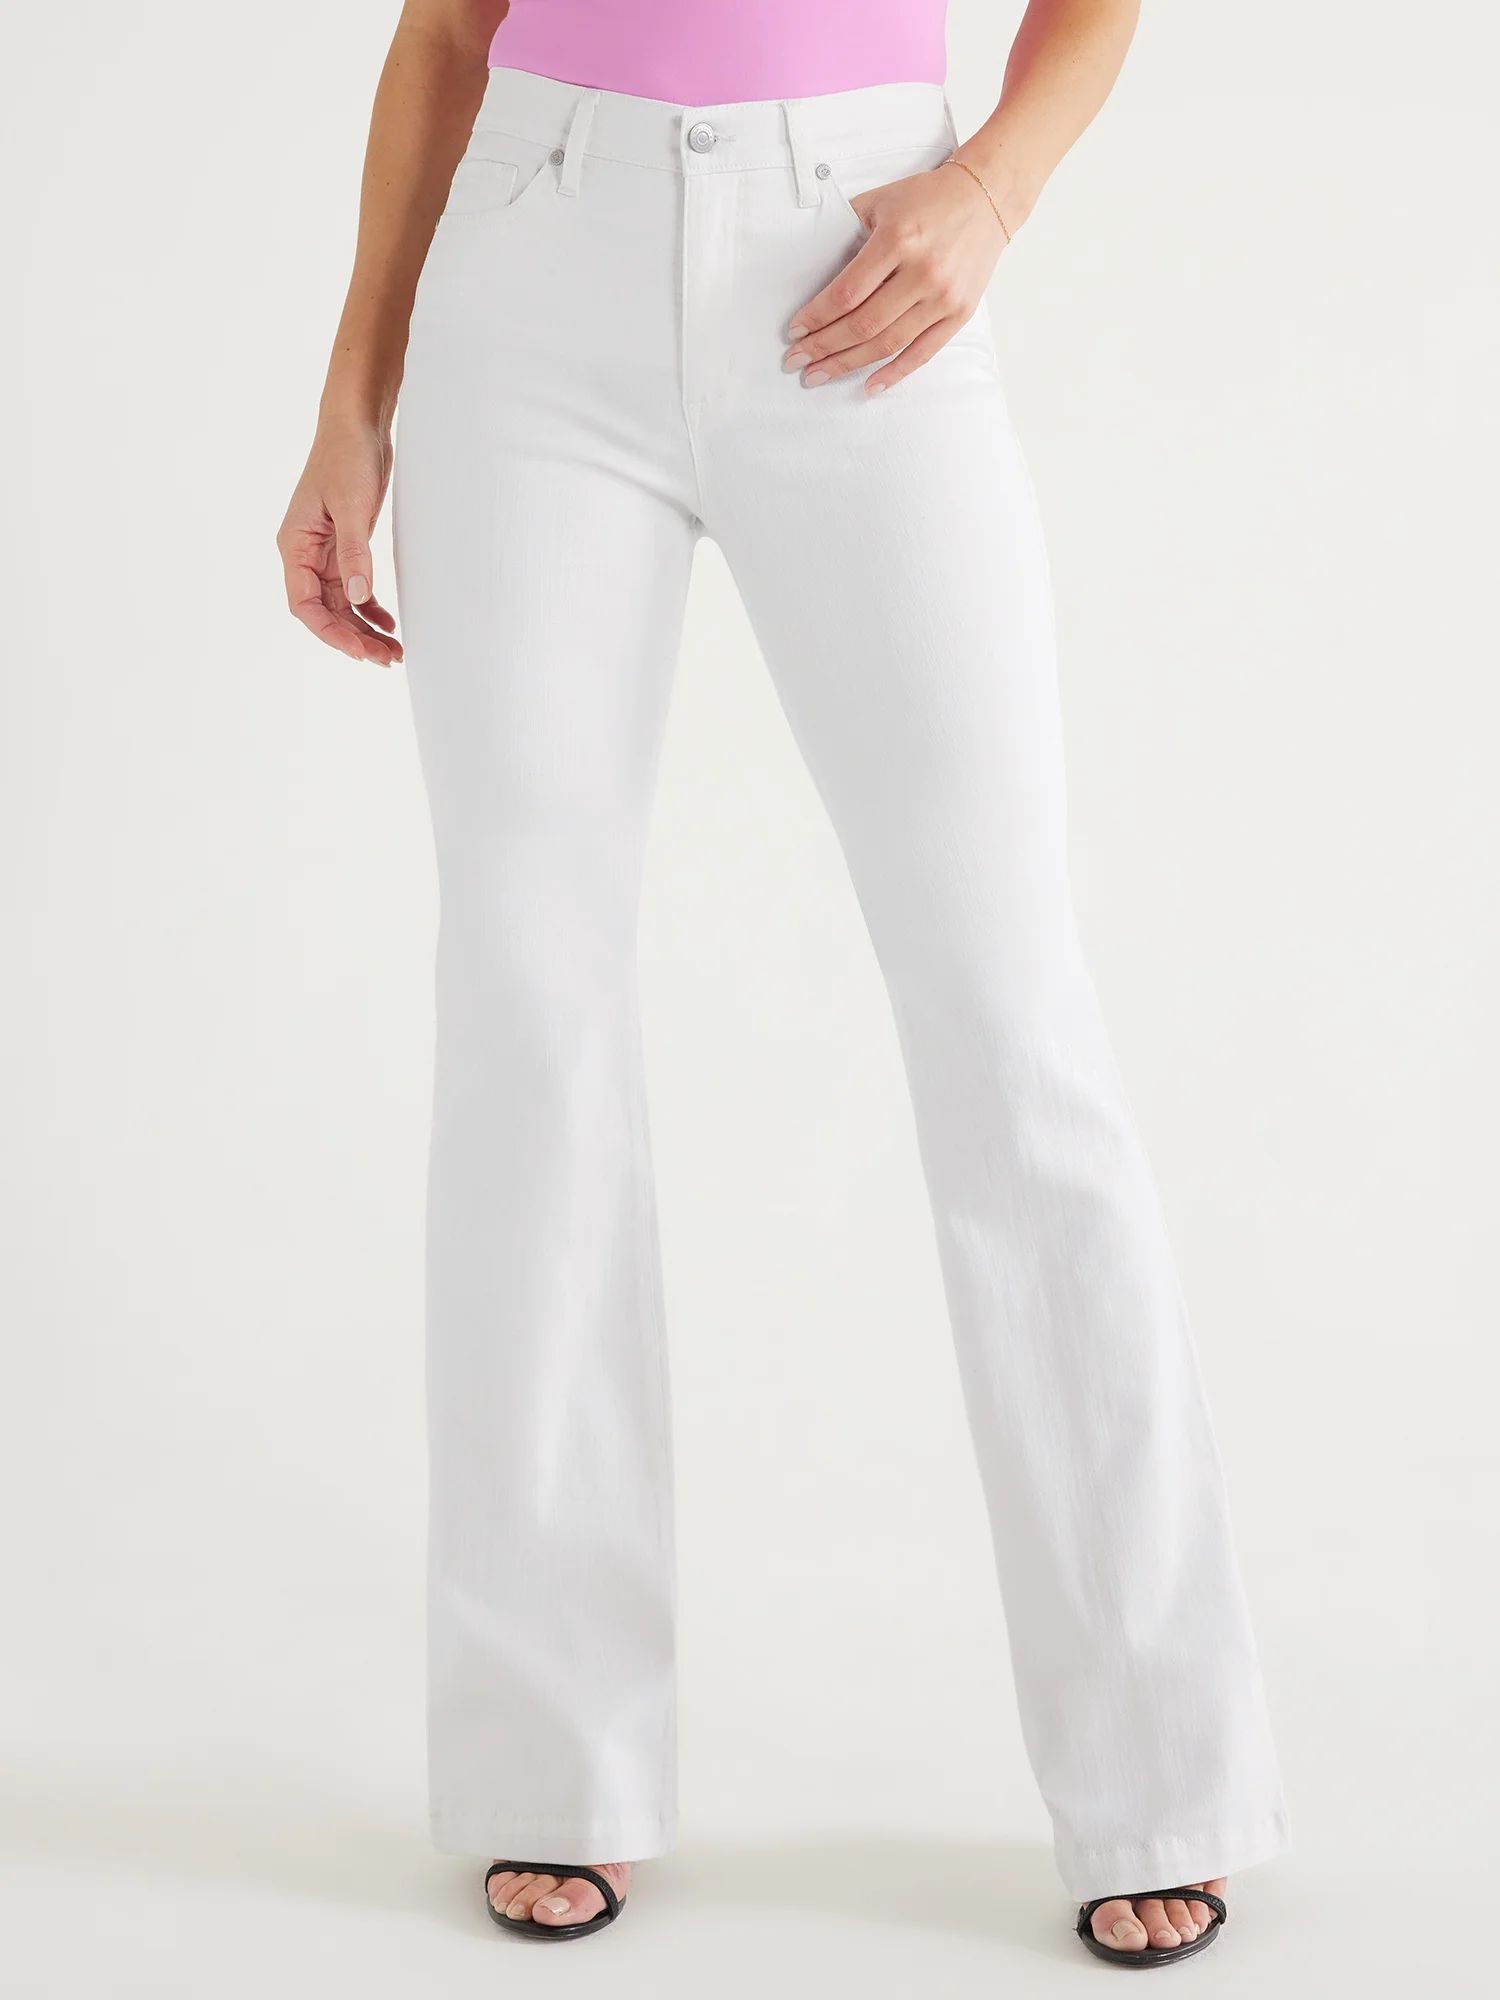 Sofia Jeans Women's Melisa Flare High Rise 5 Pocket Jeans, 33.5" Inseam, Sizes 0-20 | Walmart (US)